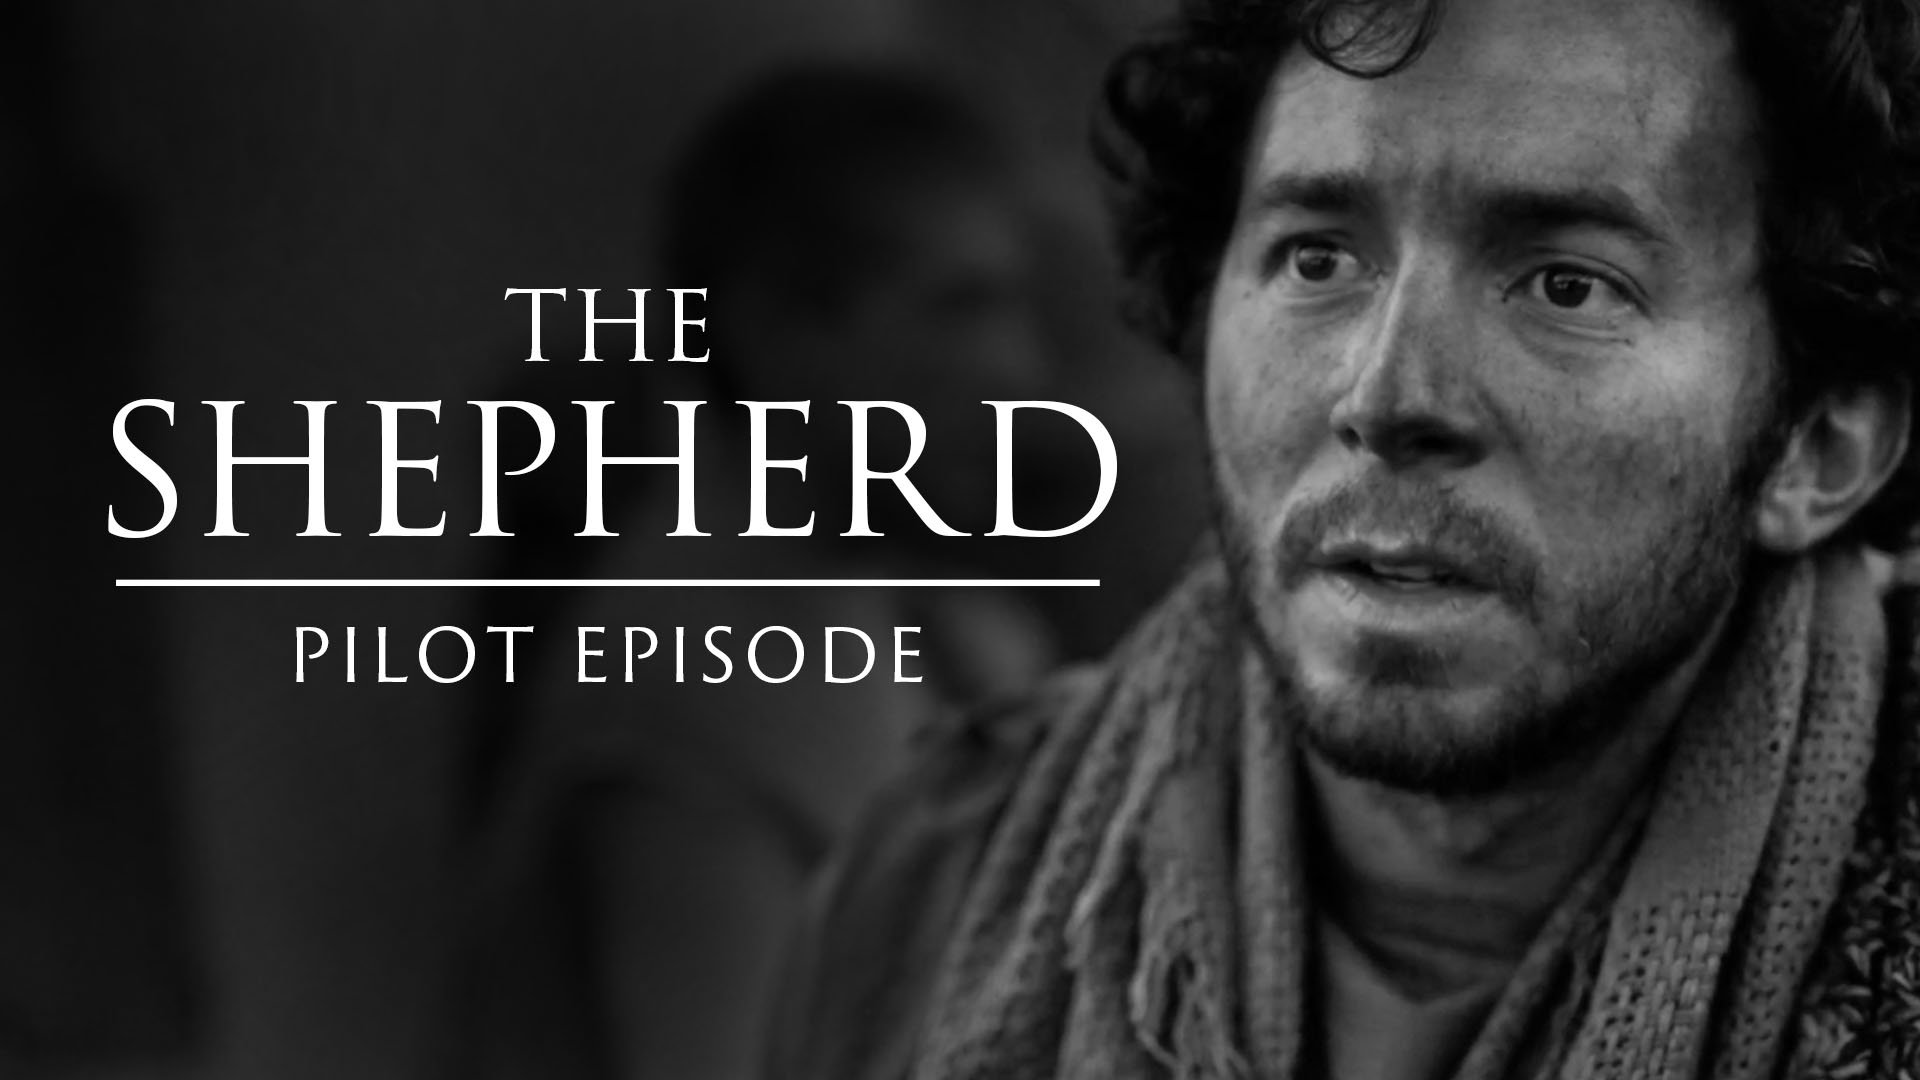 The Shepherd Pilot Episode of The Chosen